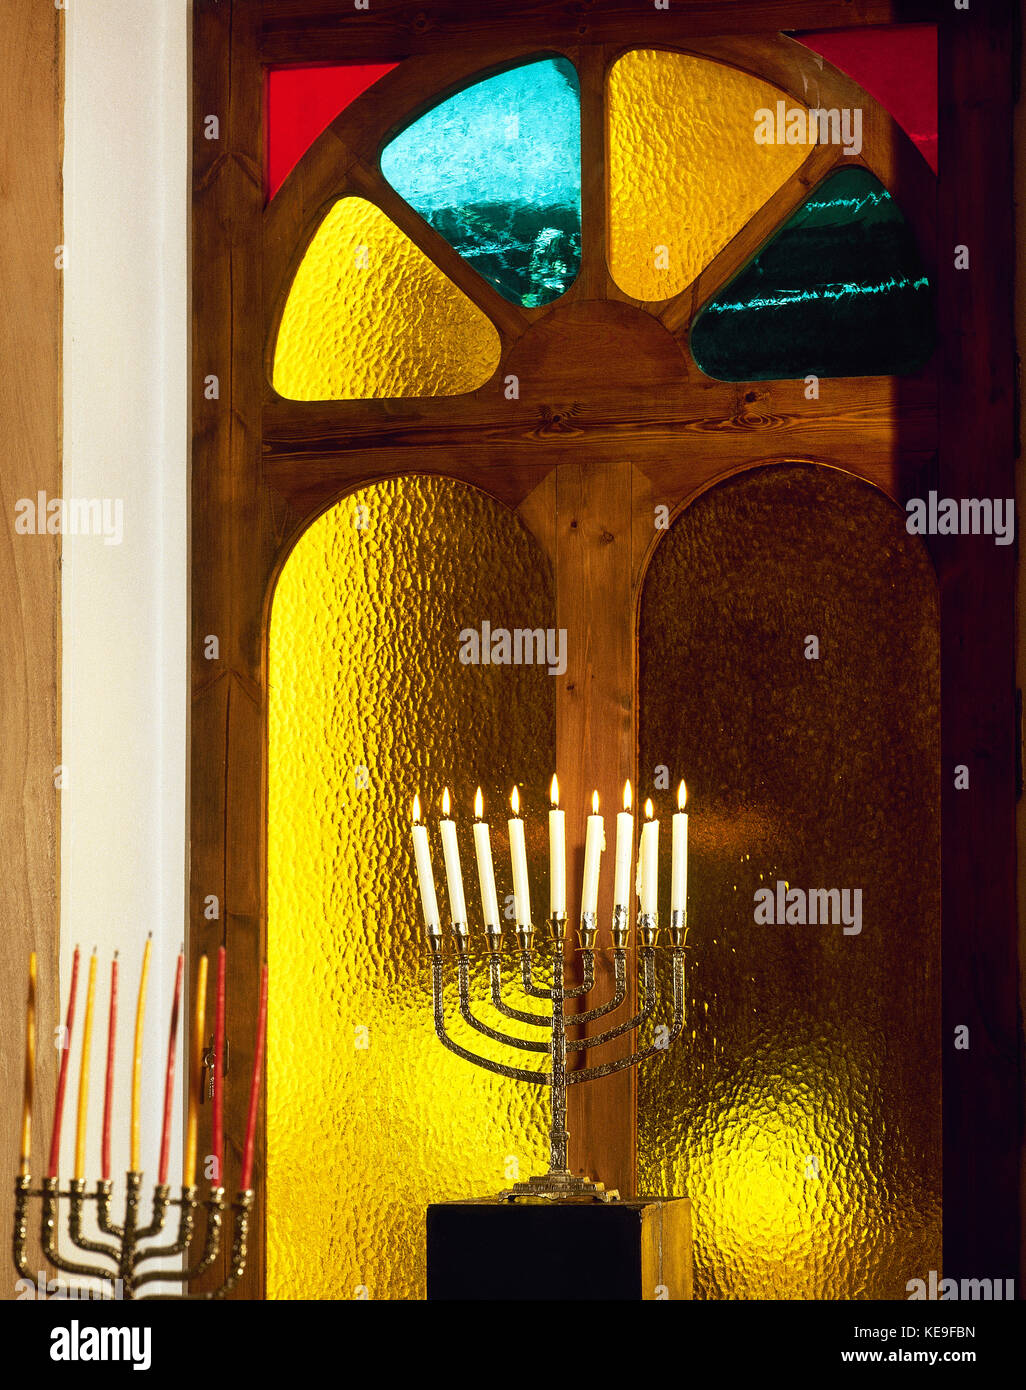 Jewish candleholder or Menorah Stock Photo